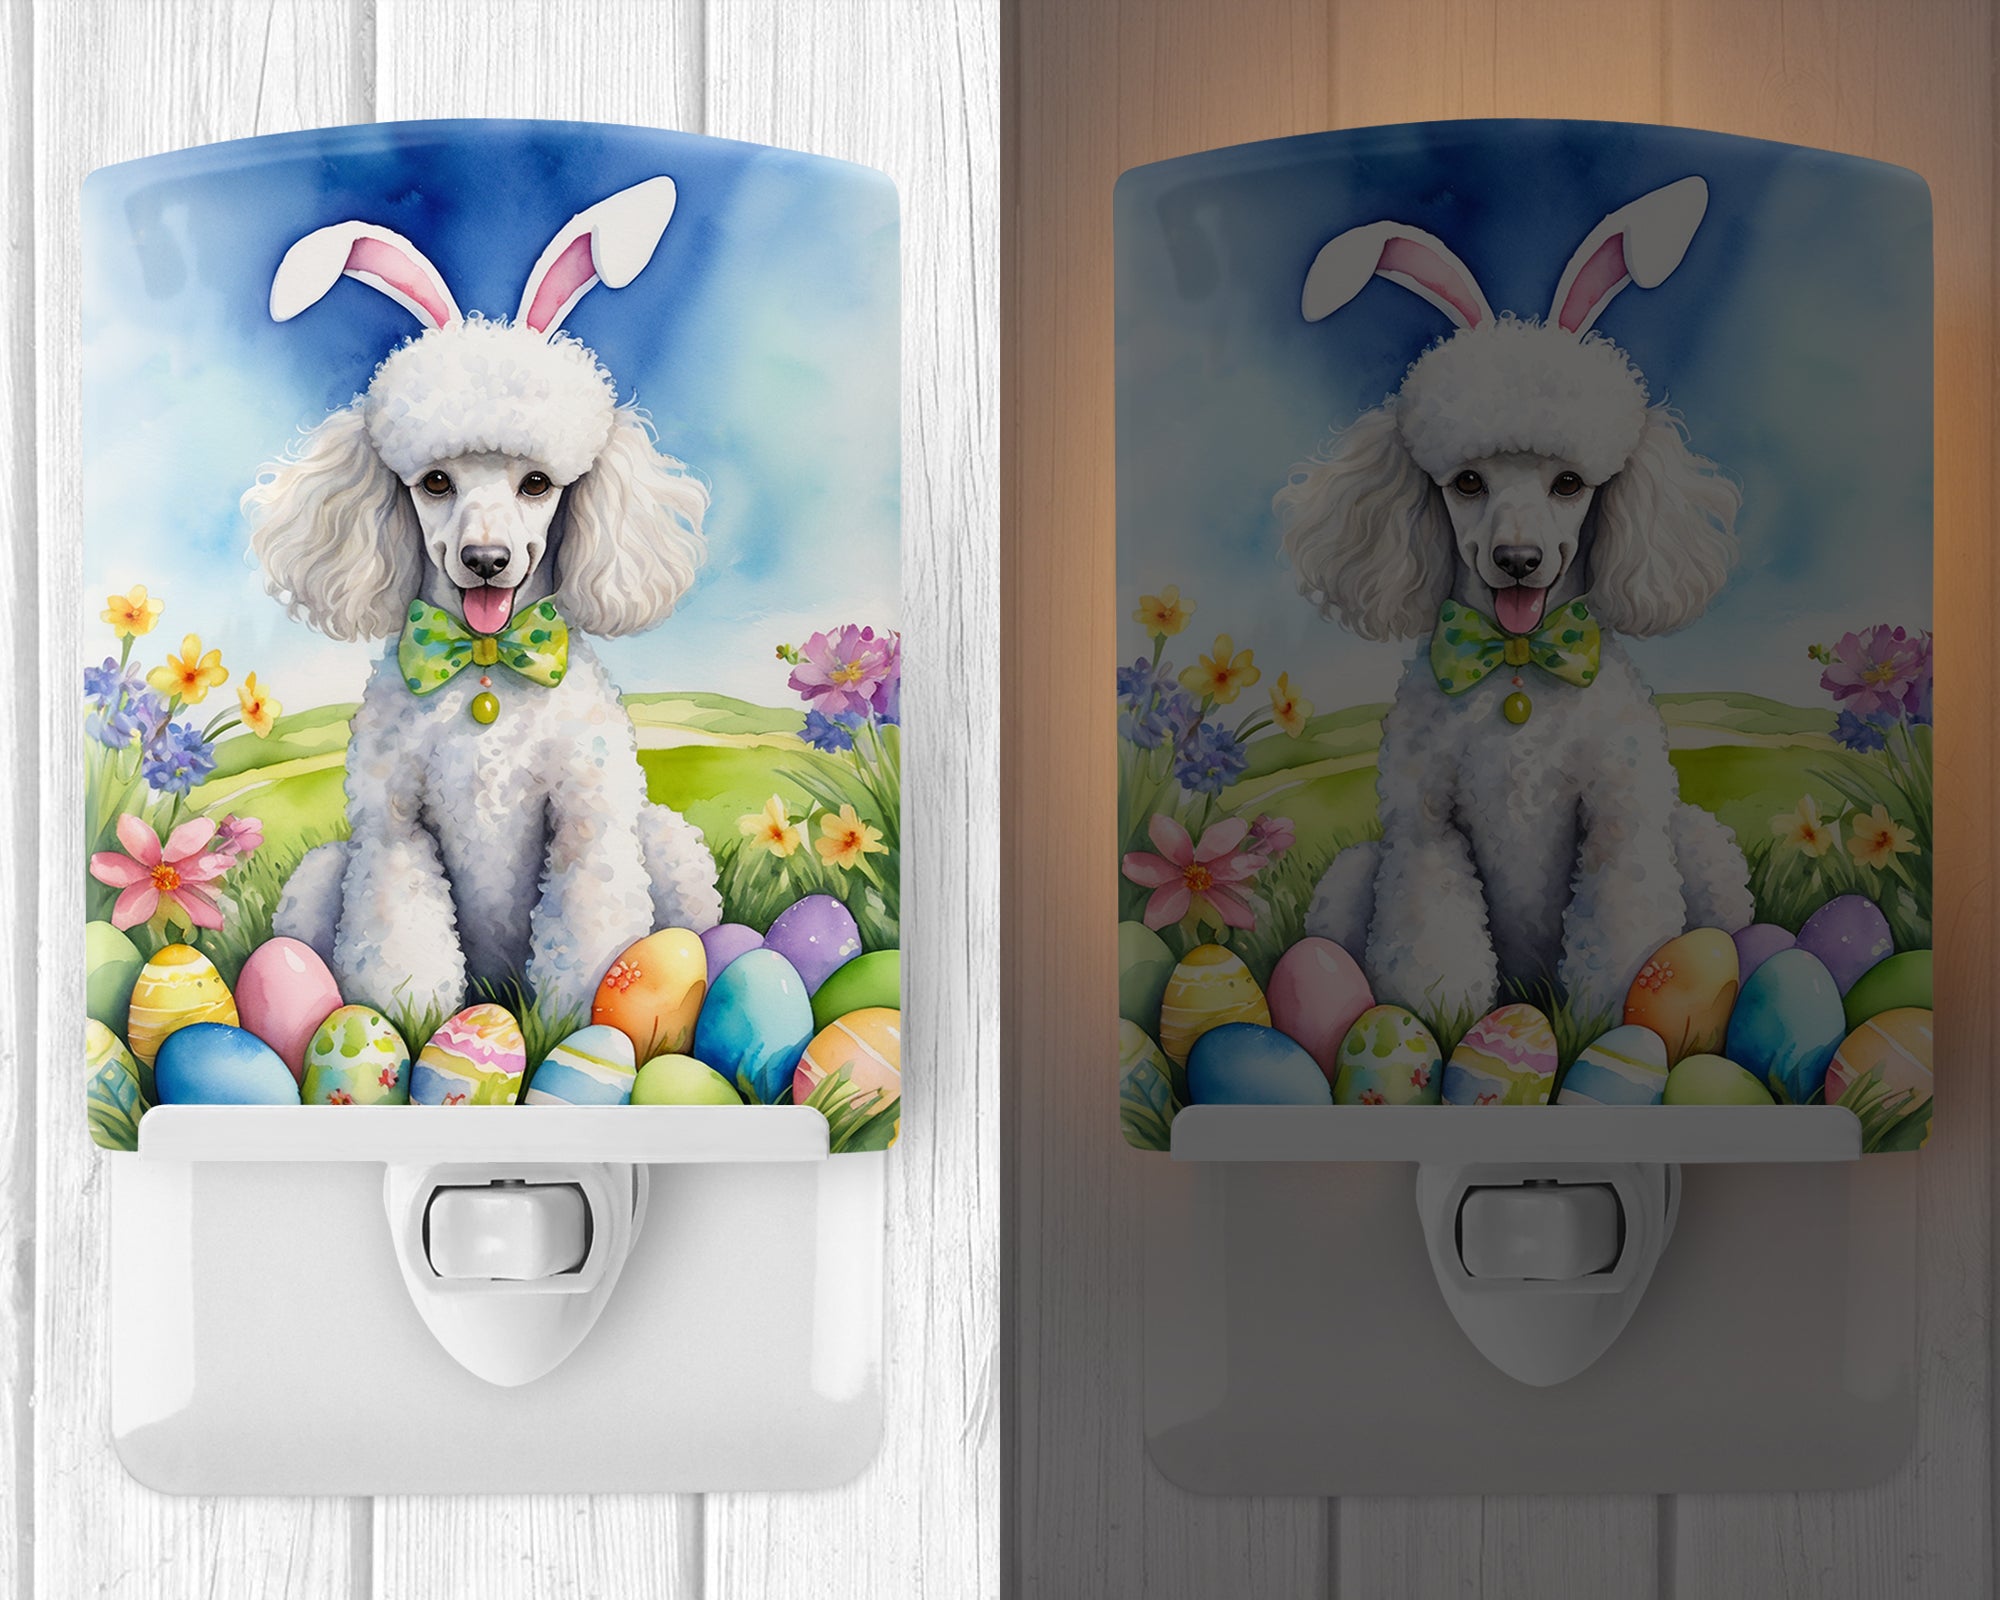 Buy this White Poodle Easter Egg Hunt Ceramic Night Light